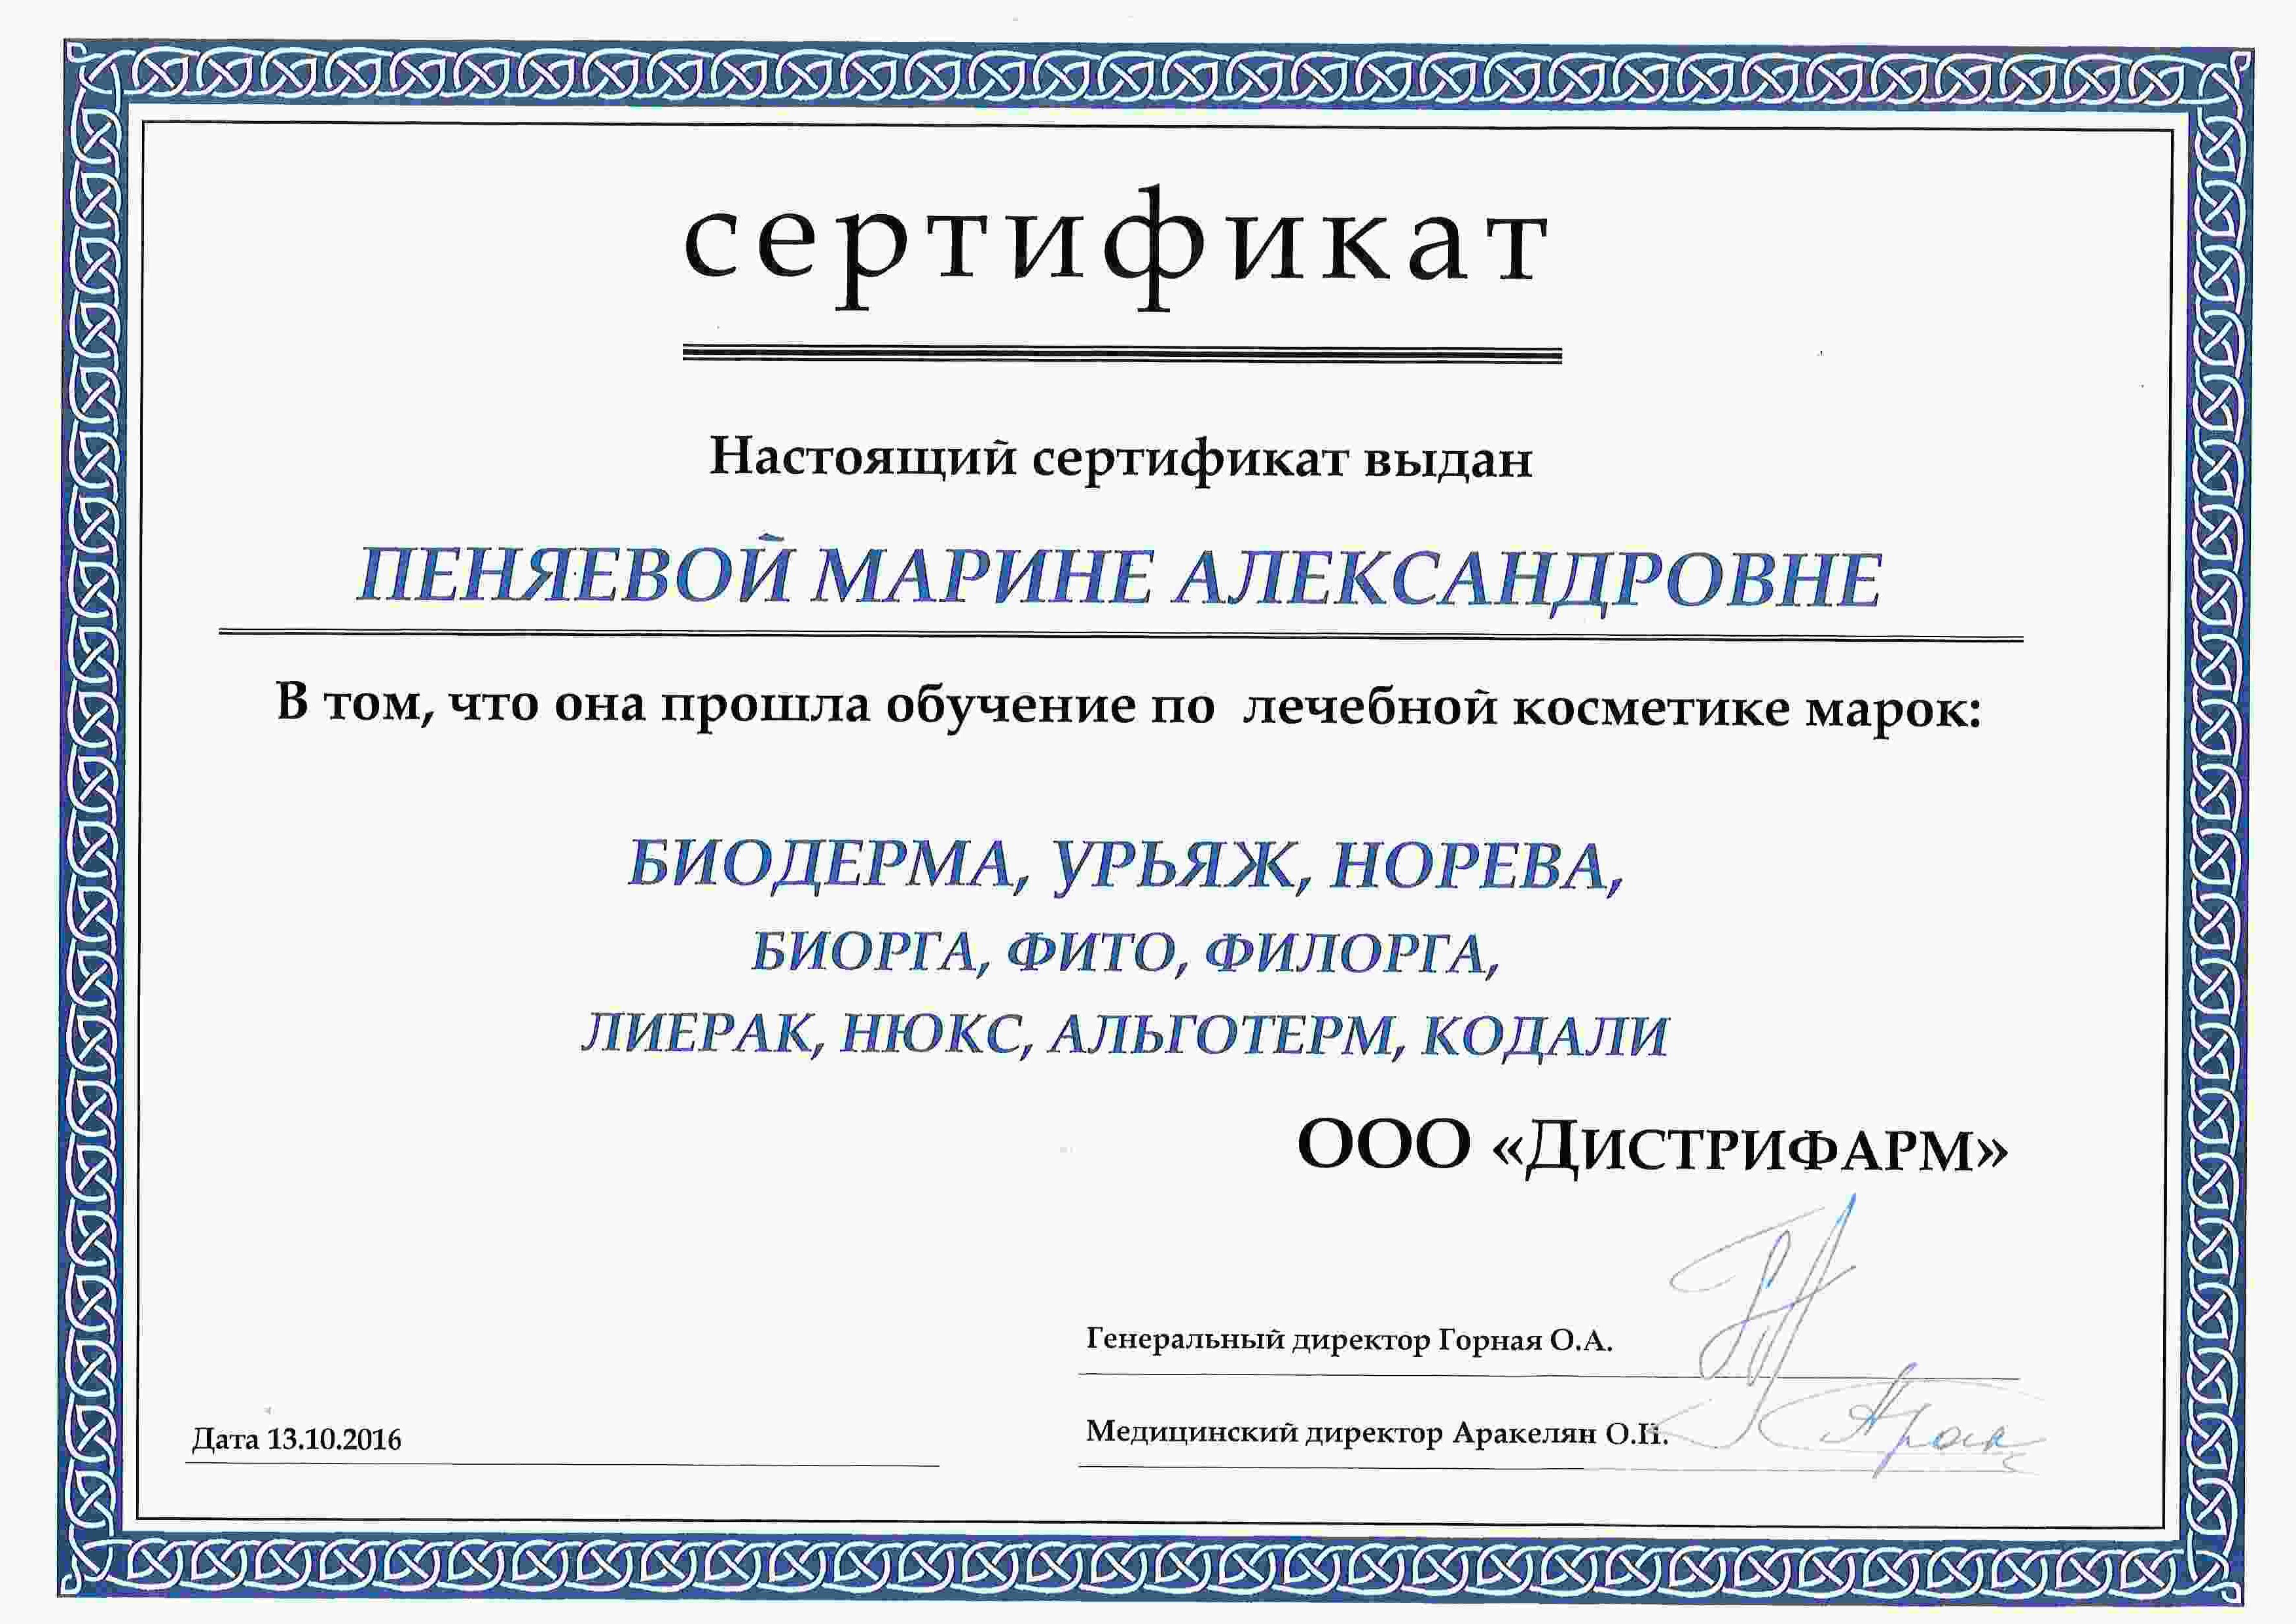 Сертификат — Обучение по лечебной косметике. Пеняева Марина Александровна